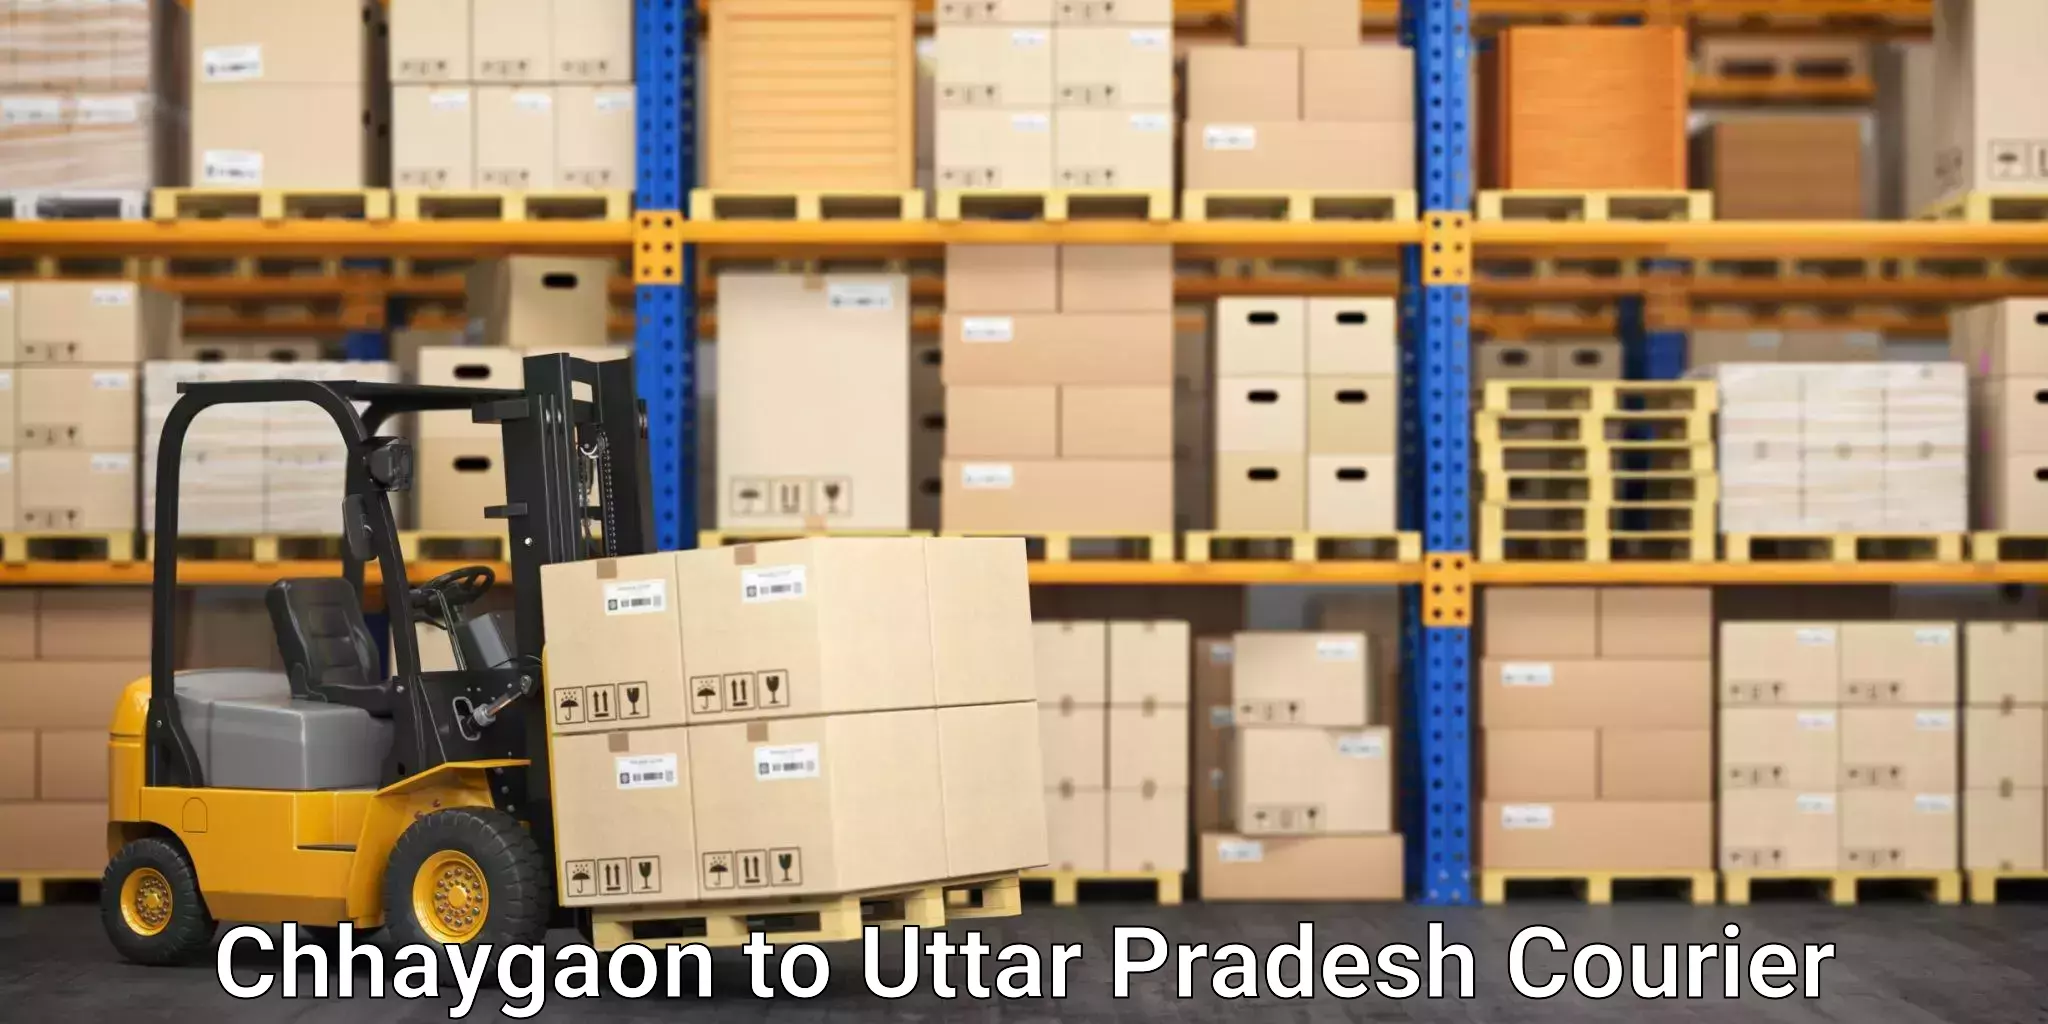 Logistics service provider Chhaygaon to Jalesar